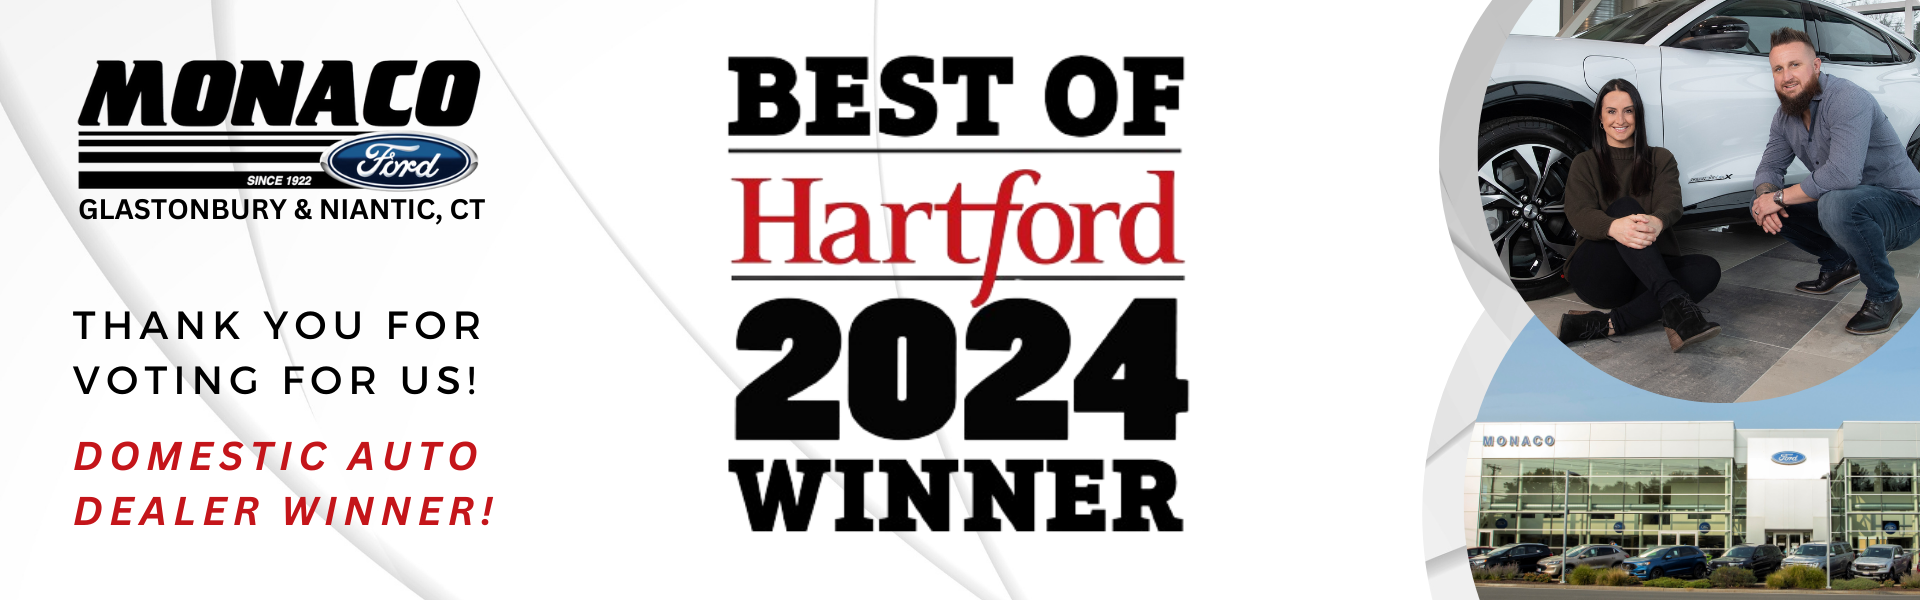 Best of Hartford Domestic Auto Dealer!